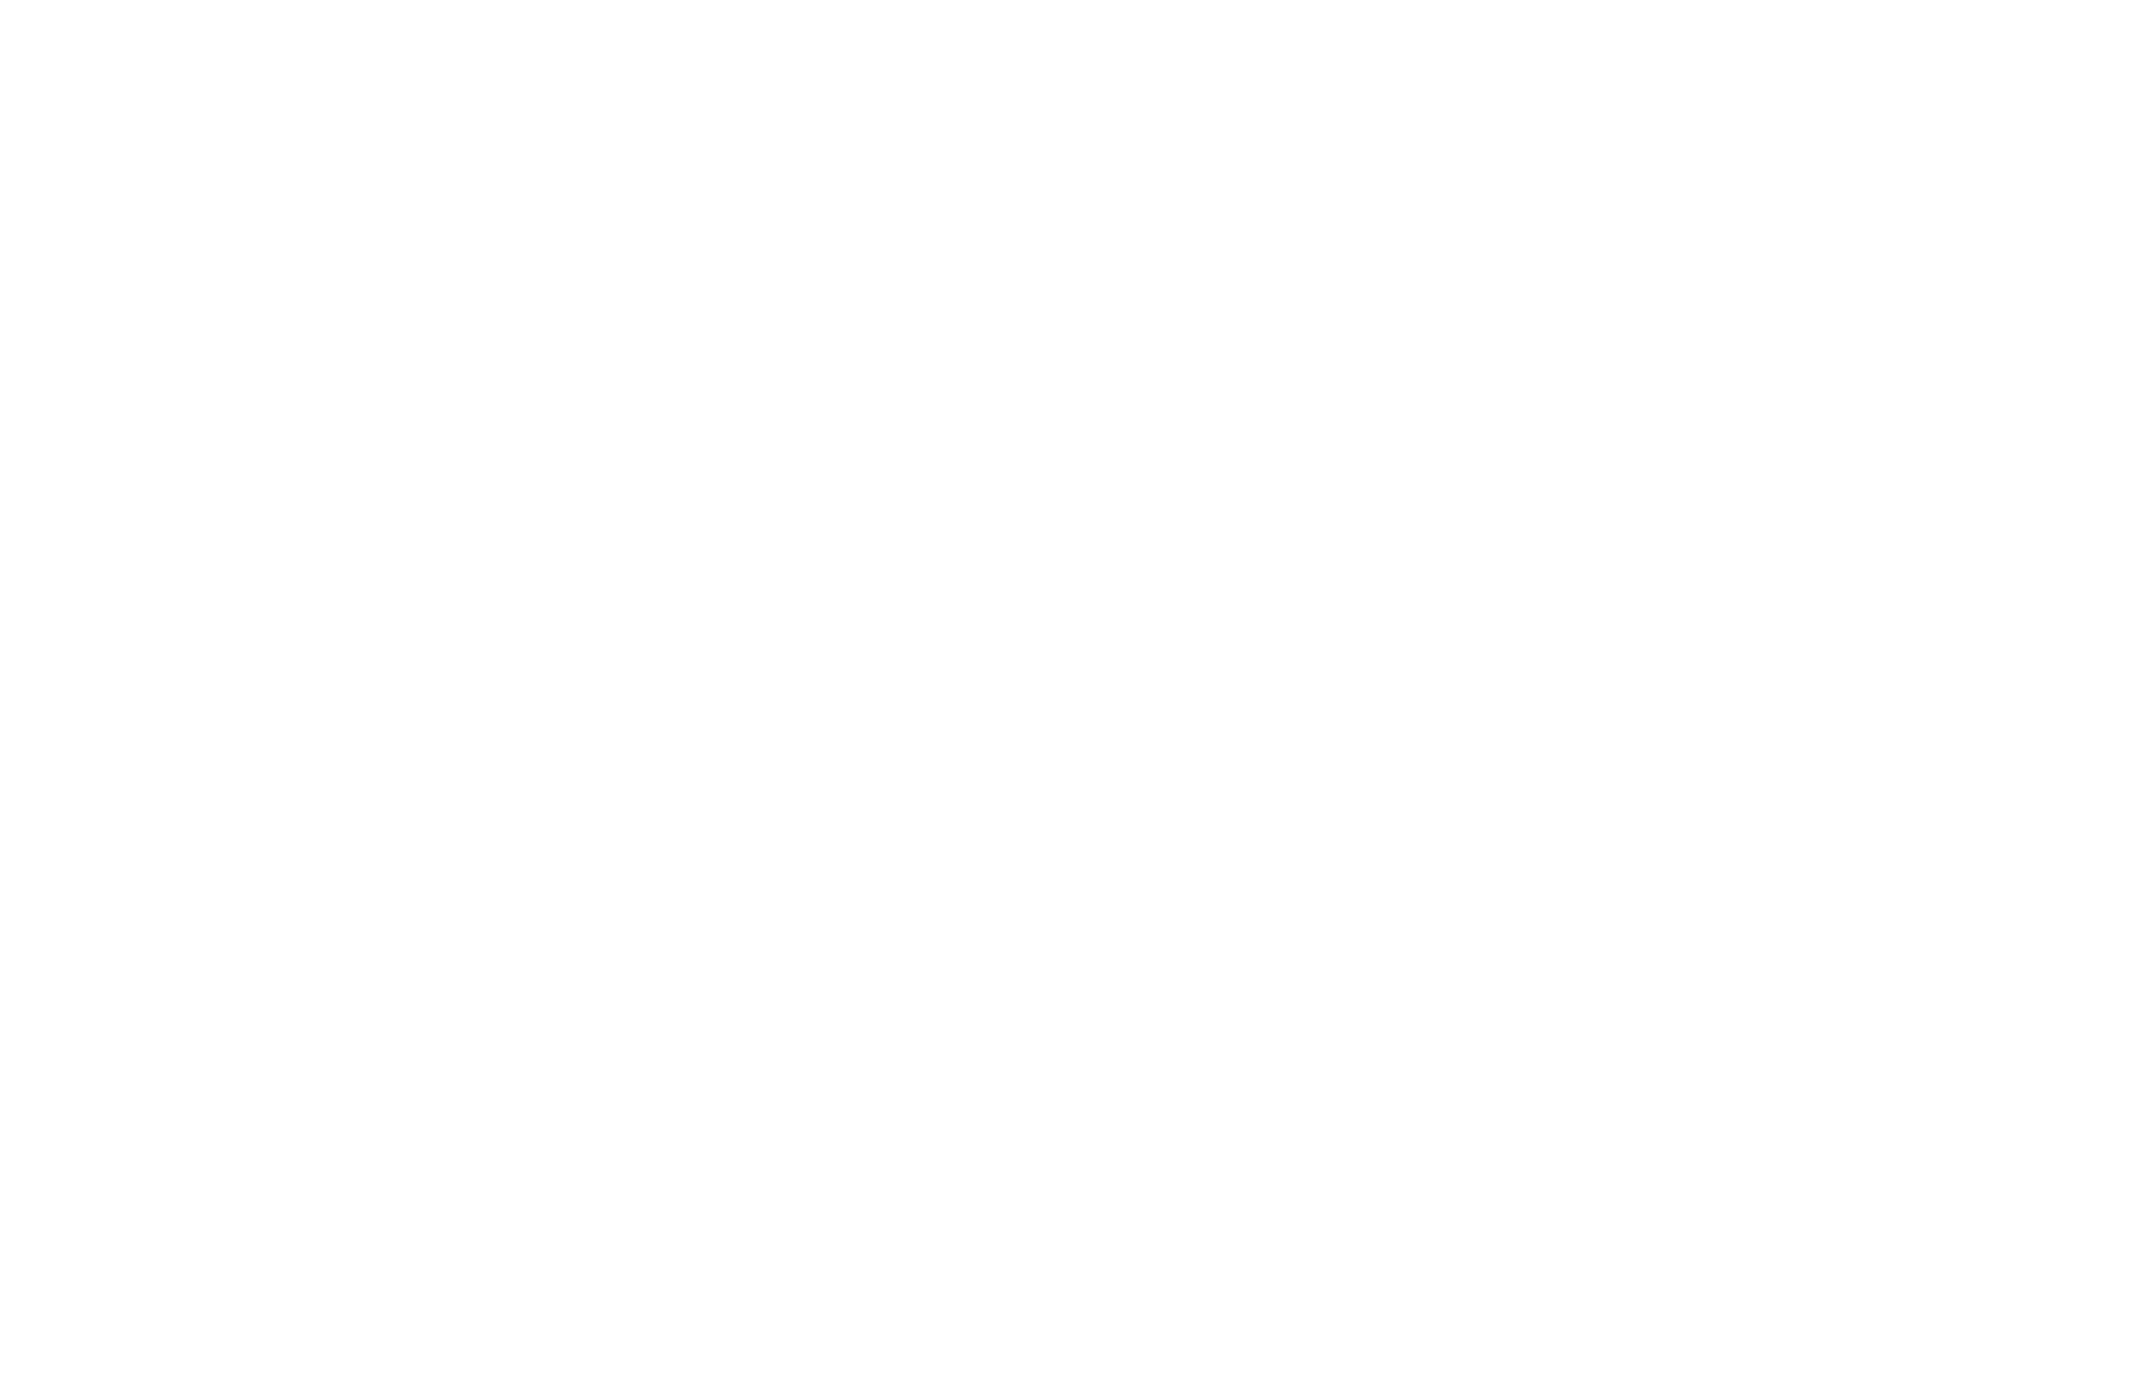 SAMMY / Genta / Waraigoe / Shaun / LON / soco